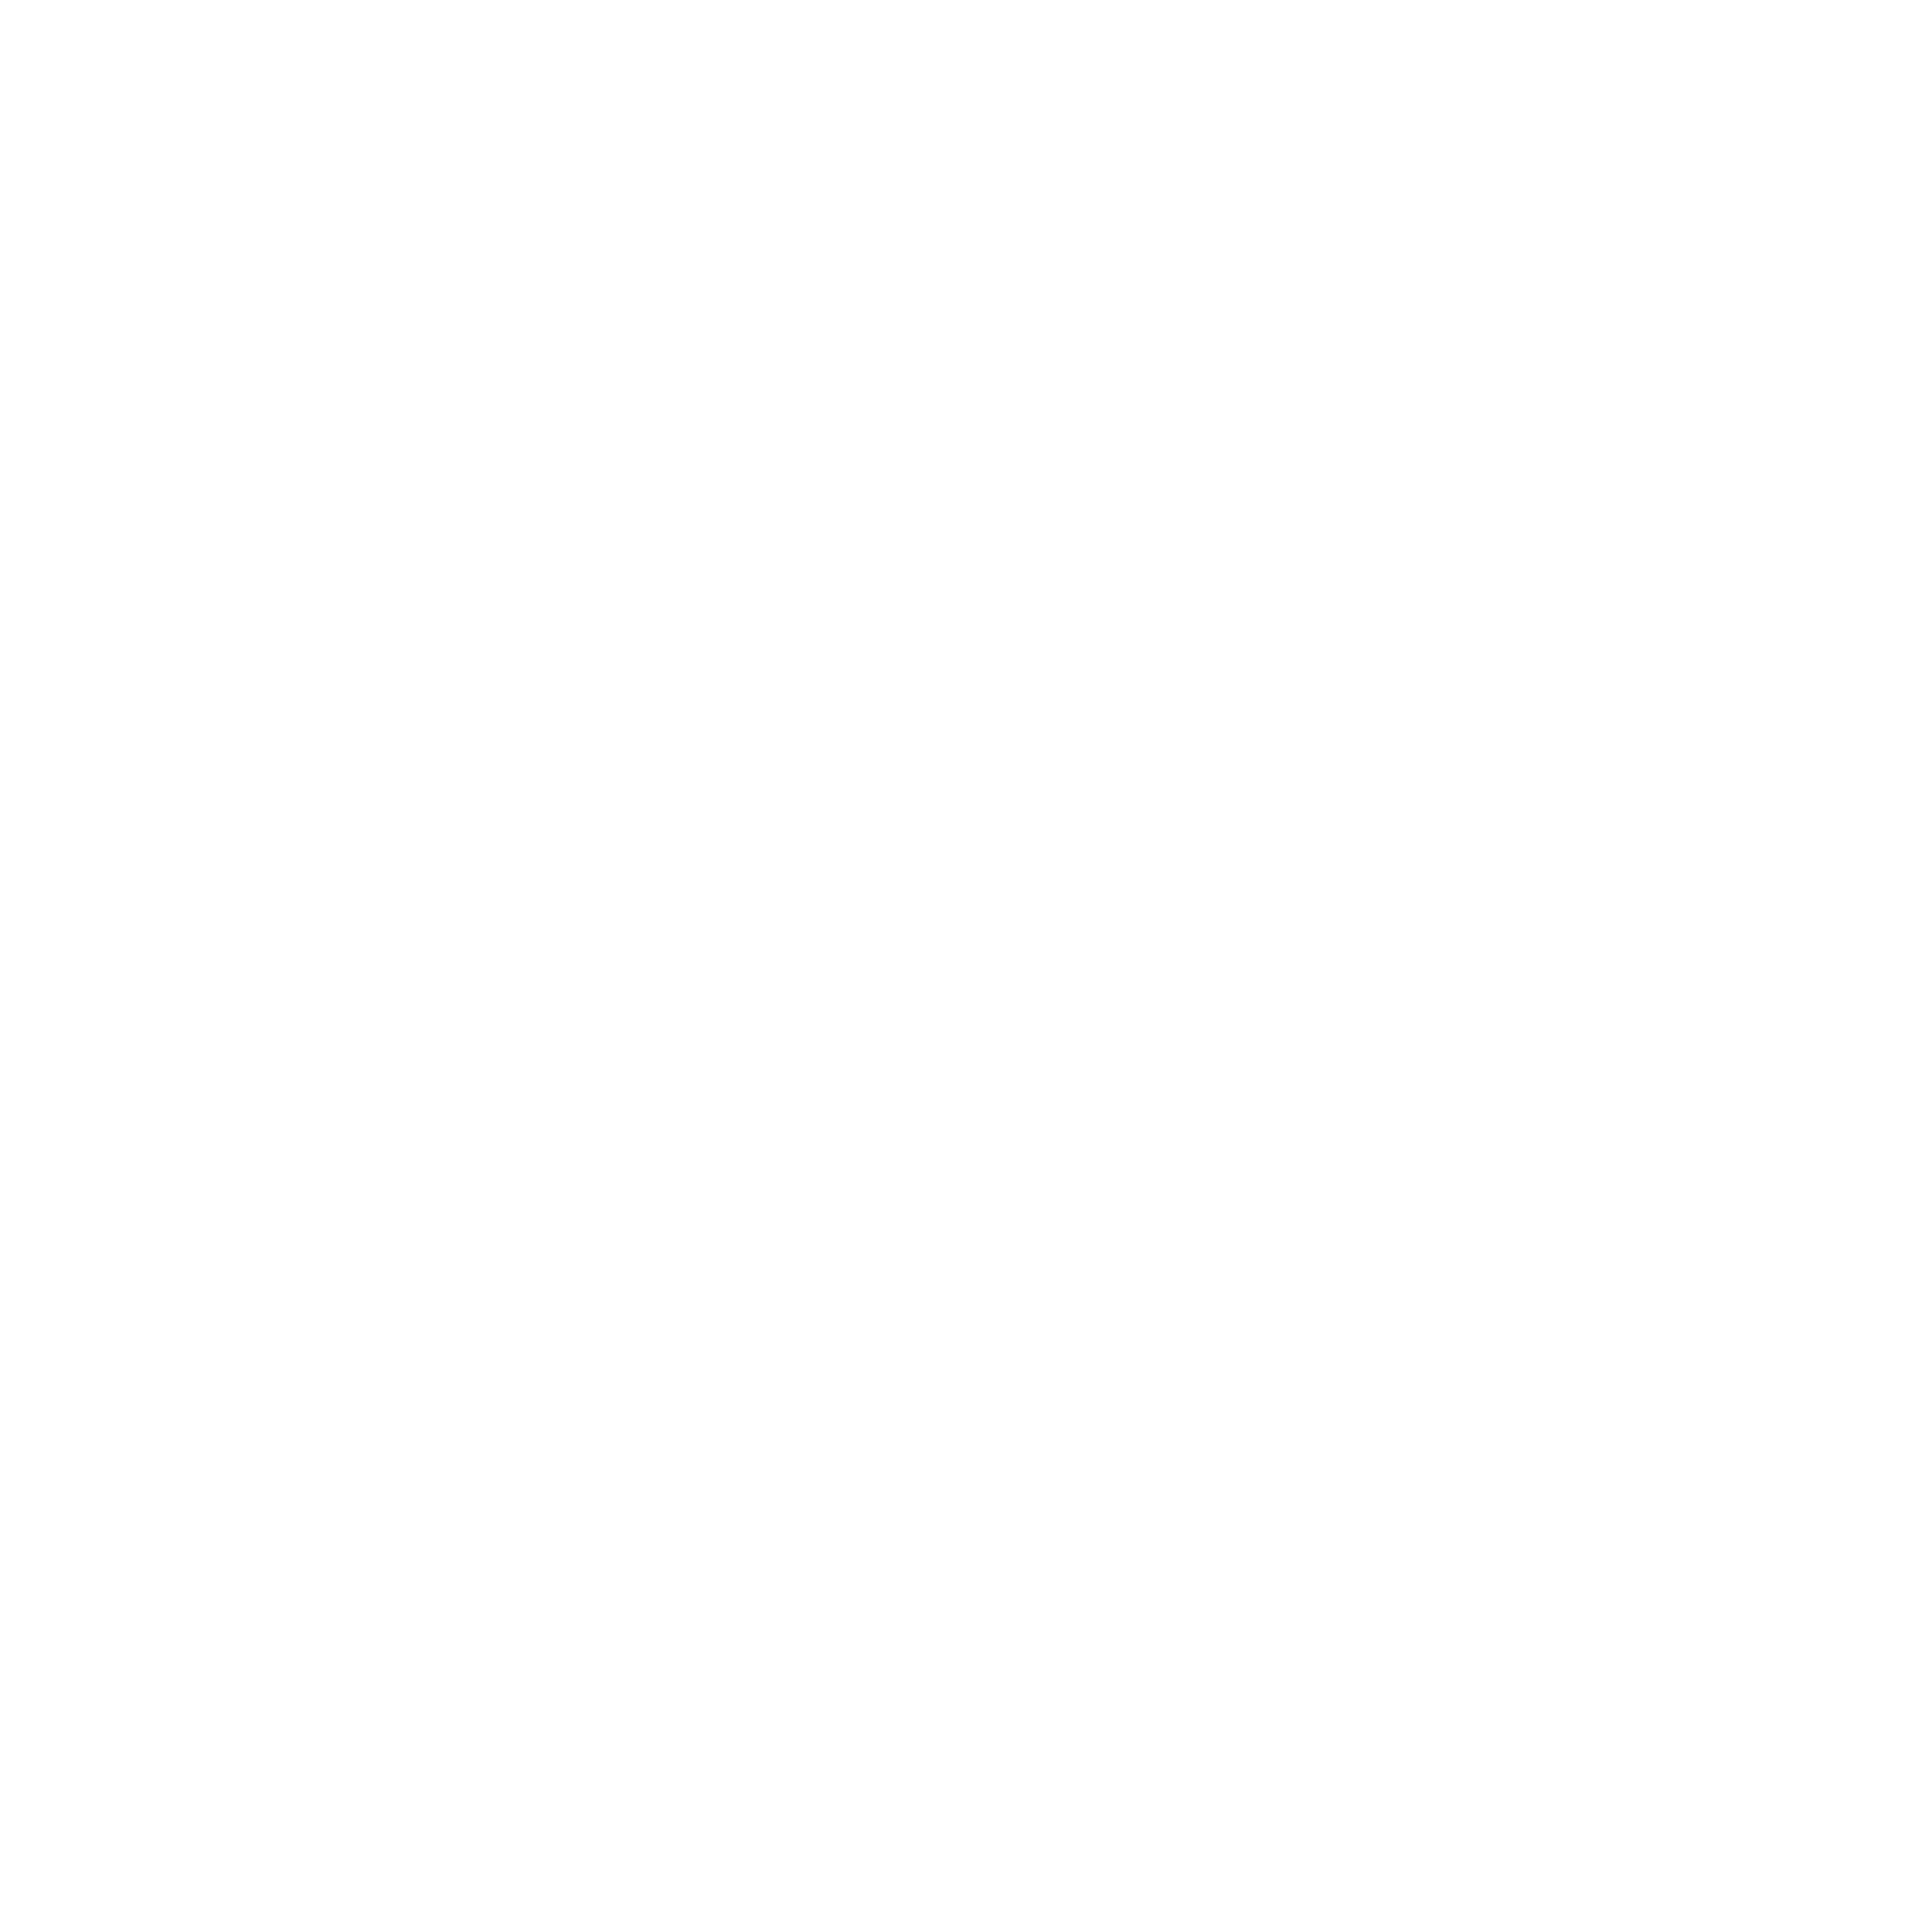 StonxFx